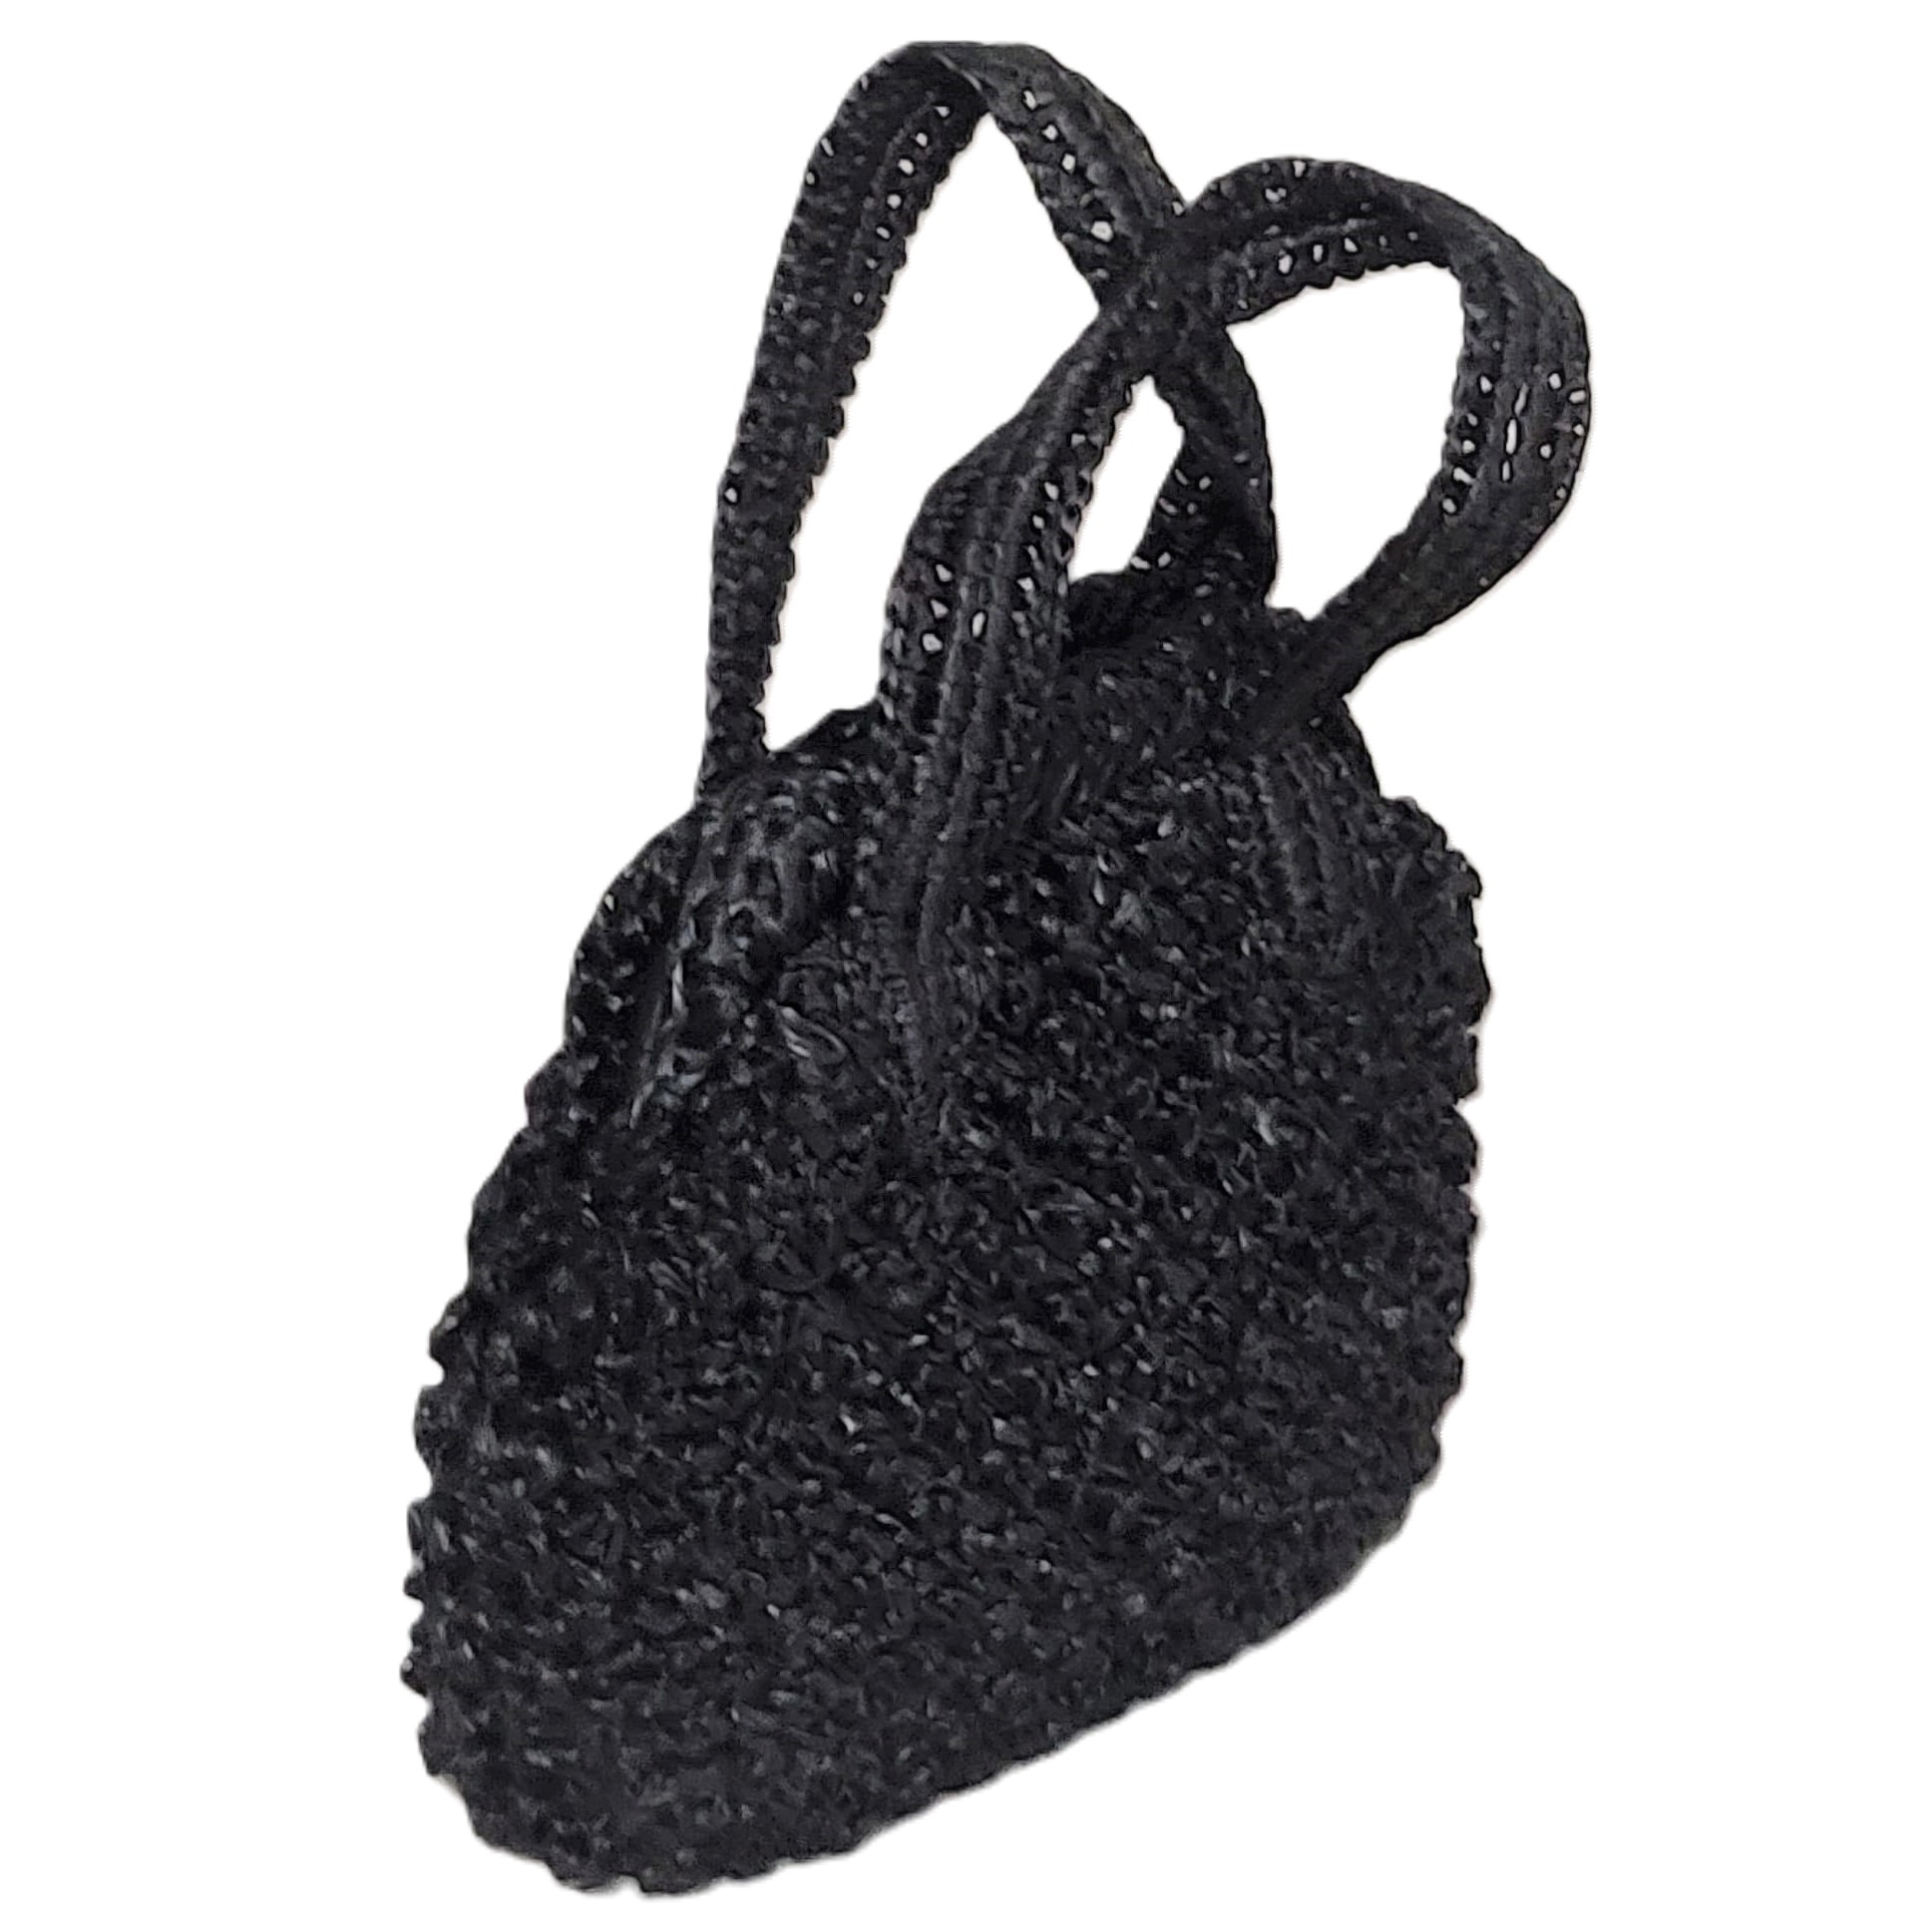 Vintage Black Straw Handbag Marchioness RH Macys & Co